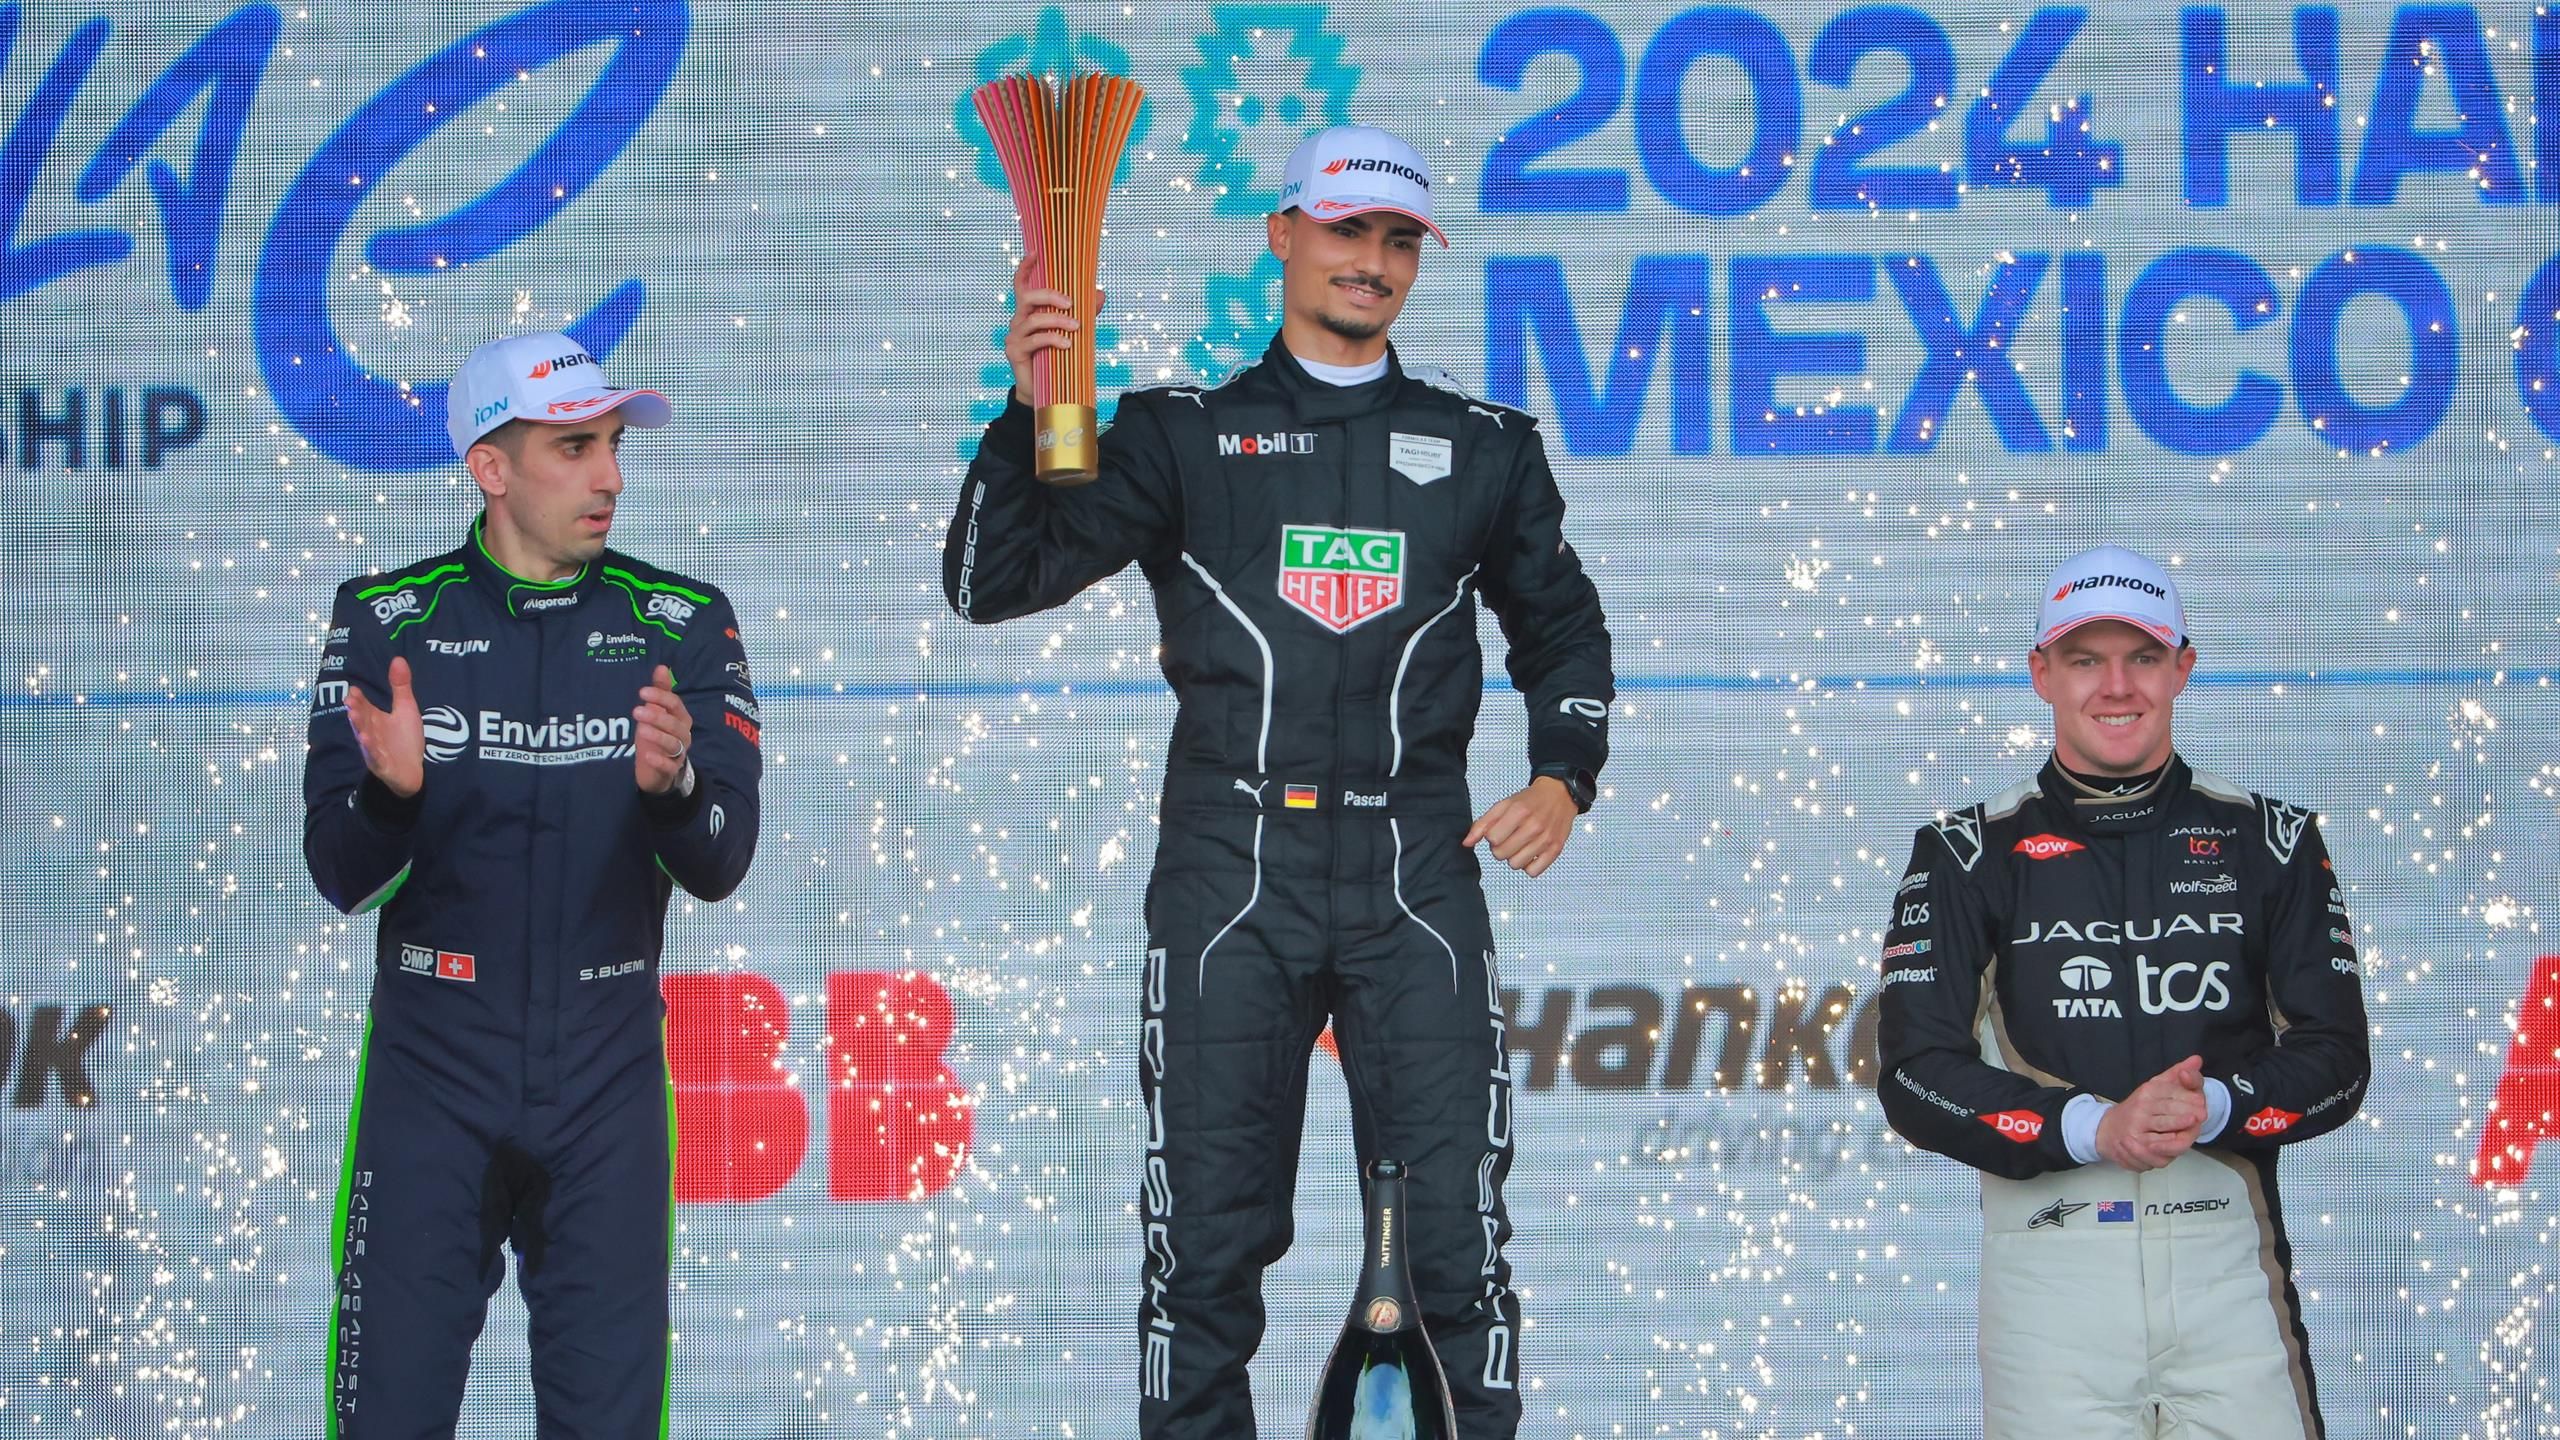 Wehrlein Secures Mexico City E-Prix Win Despite Post-Race Investigation